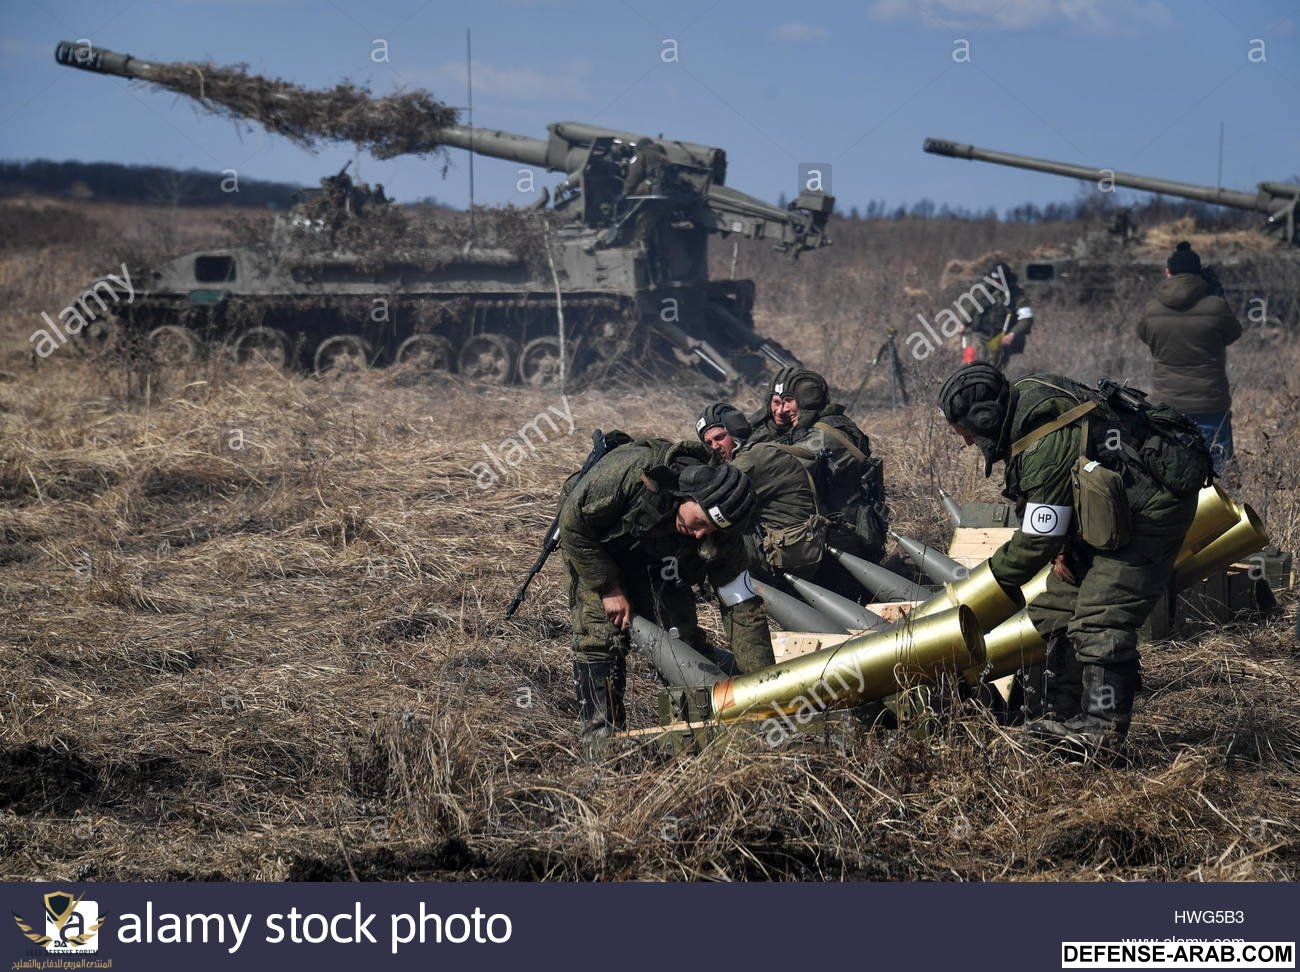 primorye-territory-russia-21st-mar-2017-servicemen-carry-projectiles-HWG5B3.jpg